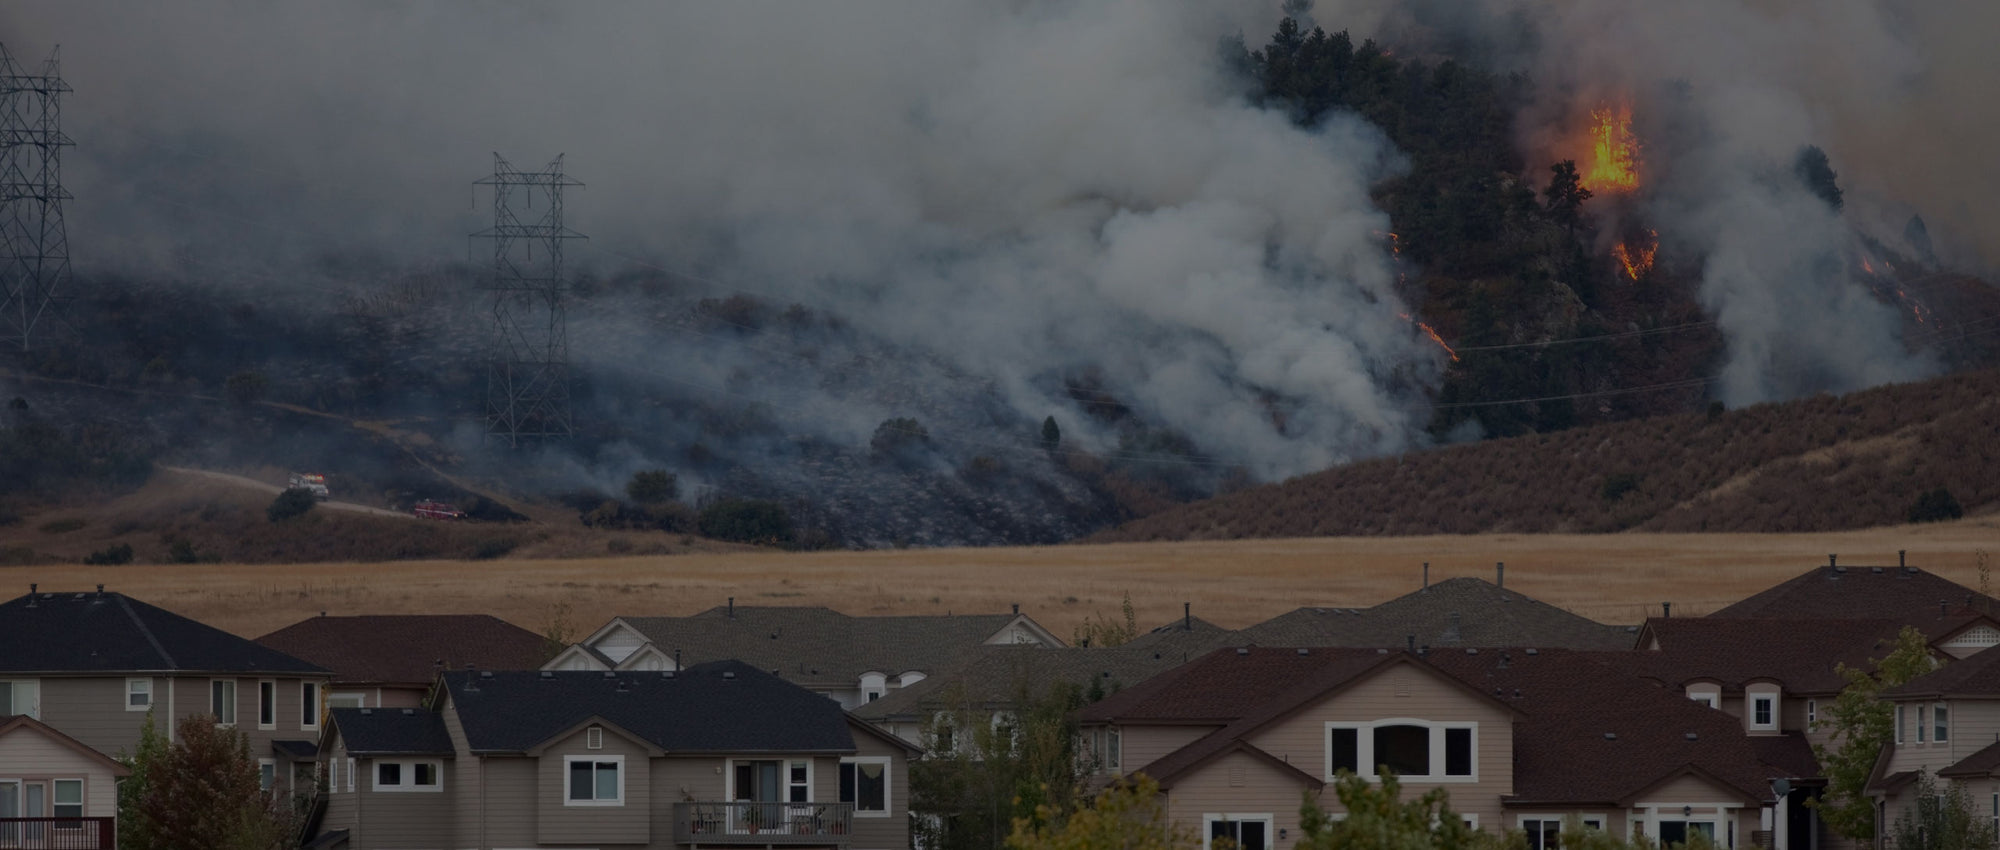 Wildfire smoke billowing near homes